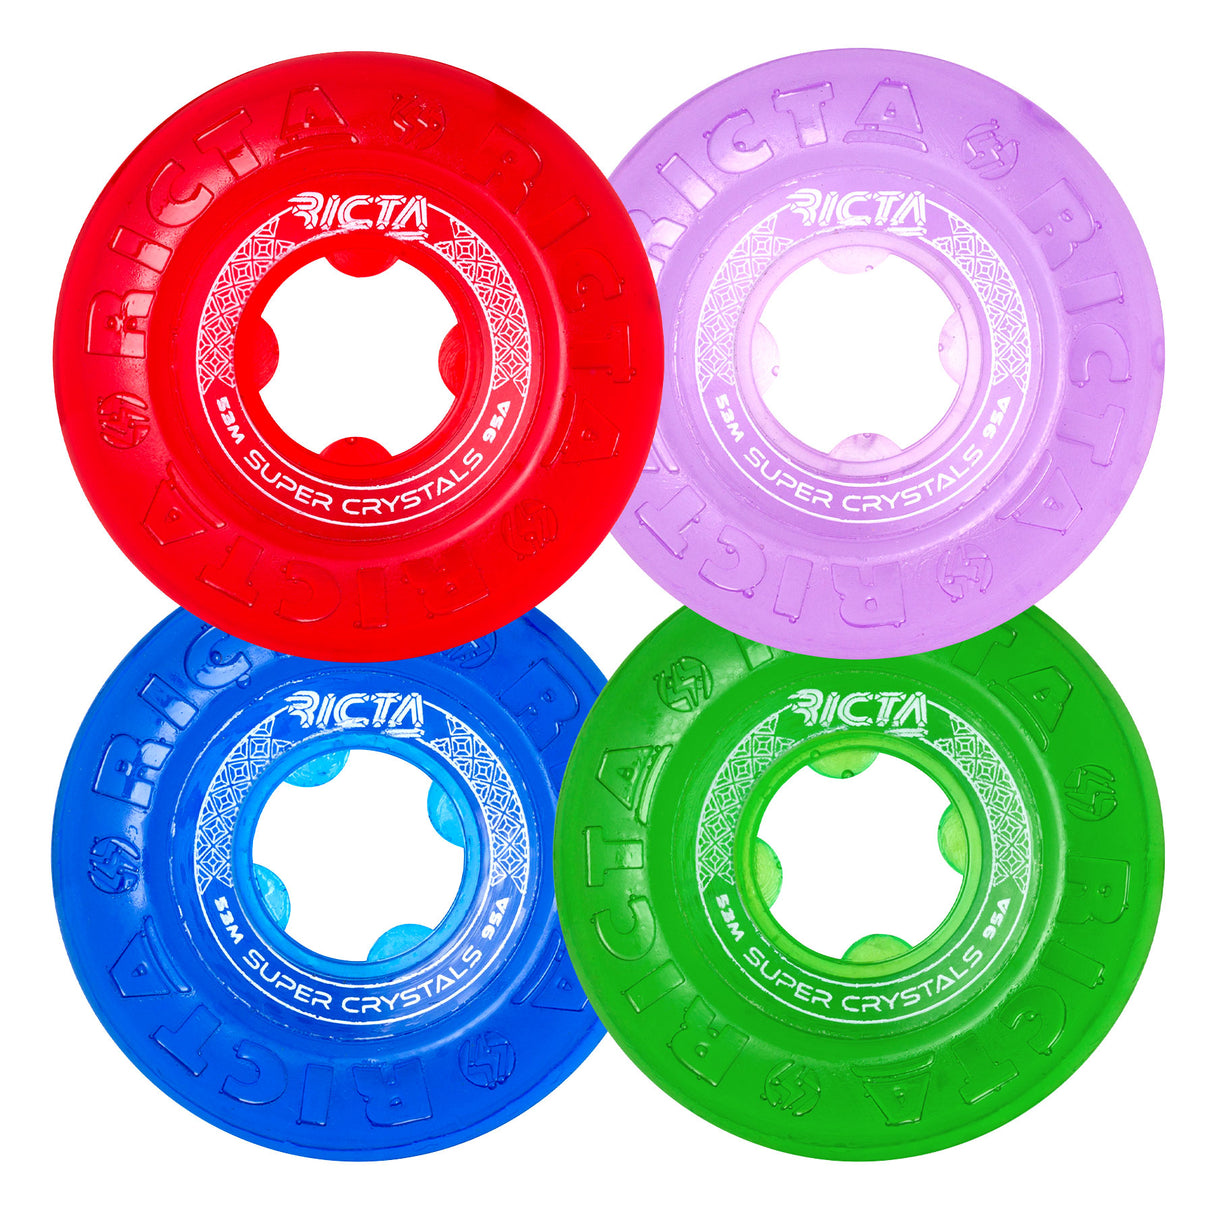 Ricta Super Crystals Trans Purple Green Blue Red 95a 53mm Wheels